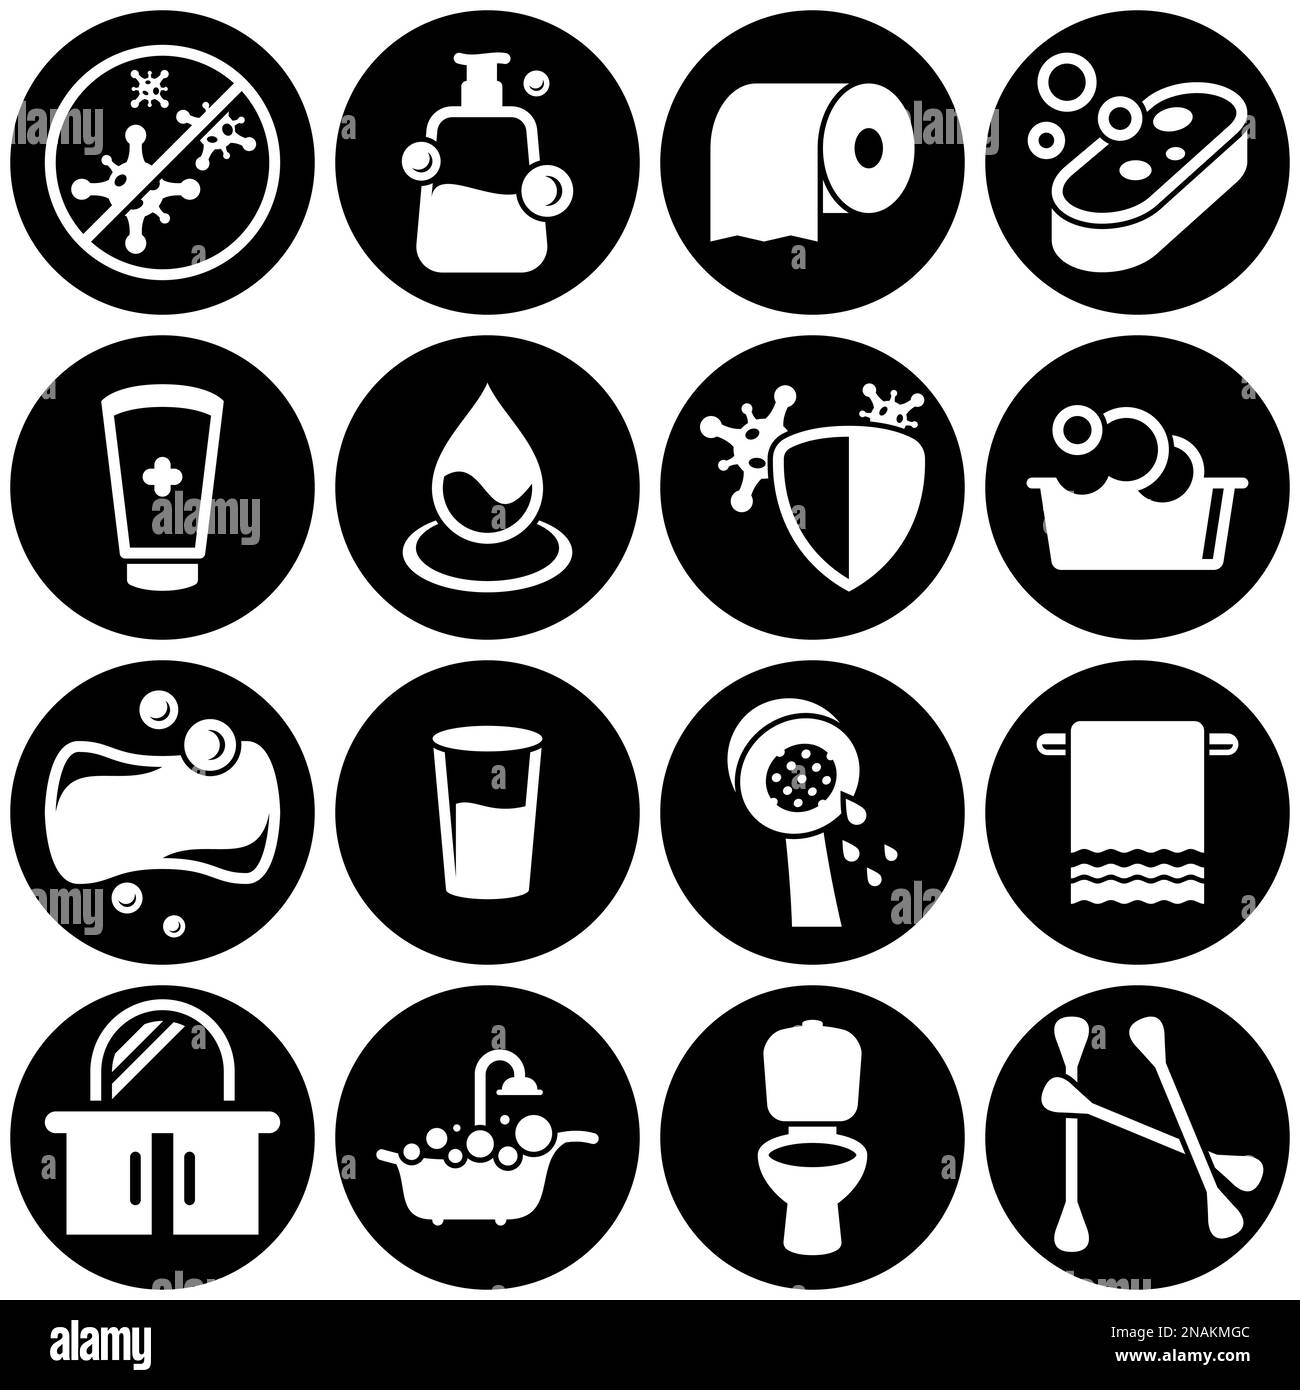 Set of simple icons on a theme Hygiene, sanitation, latrine, vector, design, collection, flat, sign, symbol,element, object, illustration. White backg Stock Vector